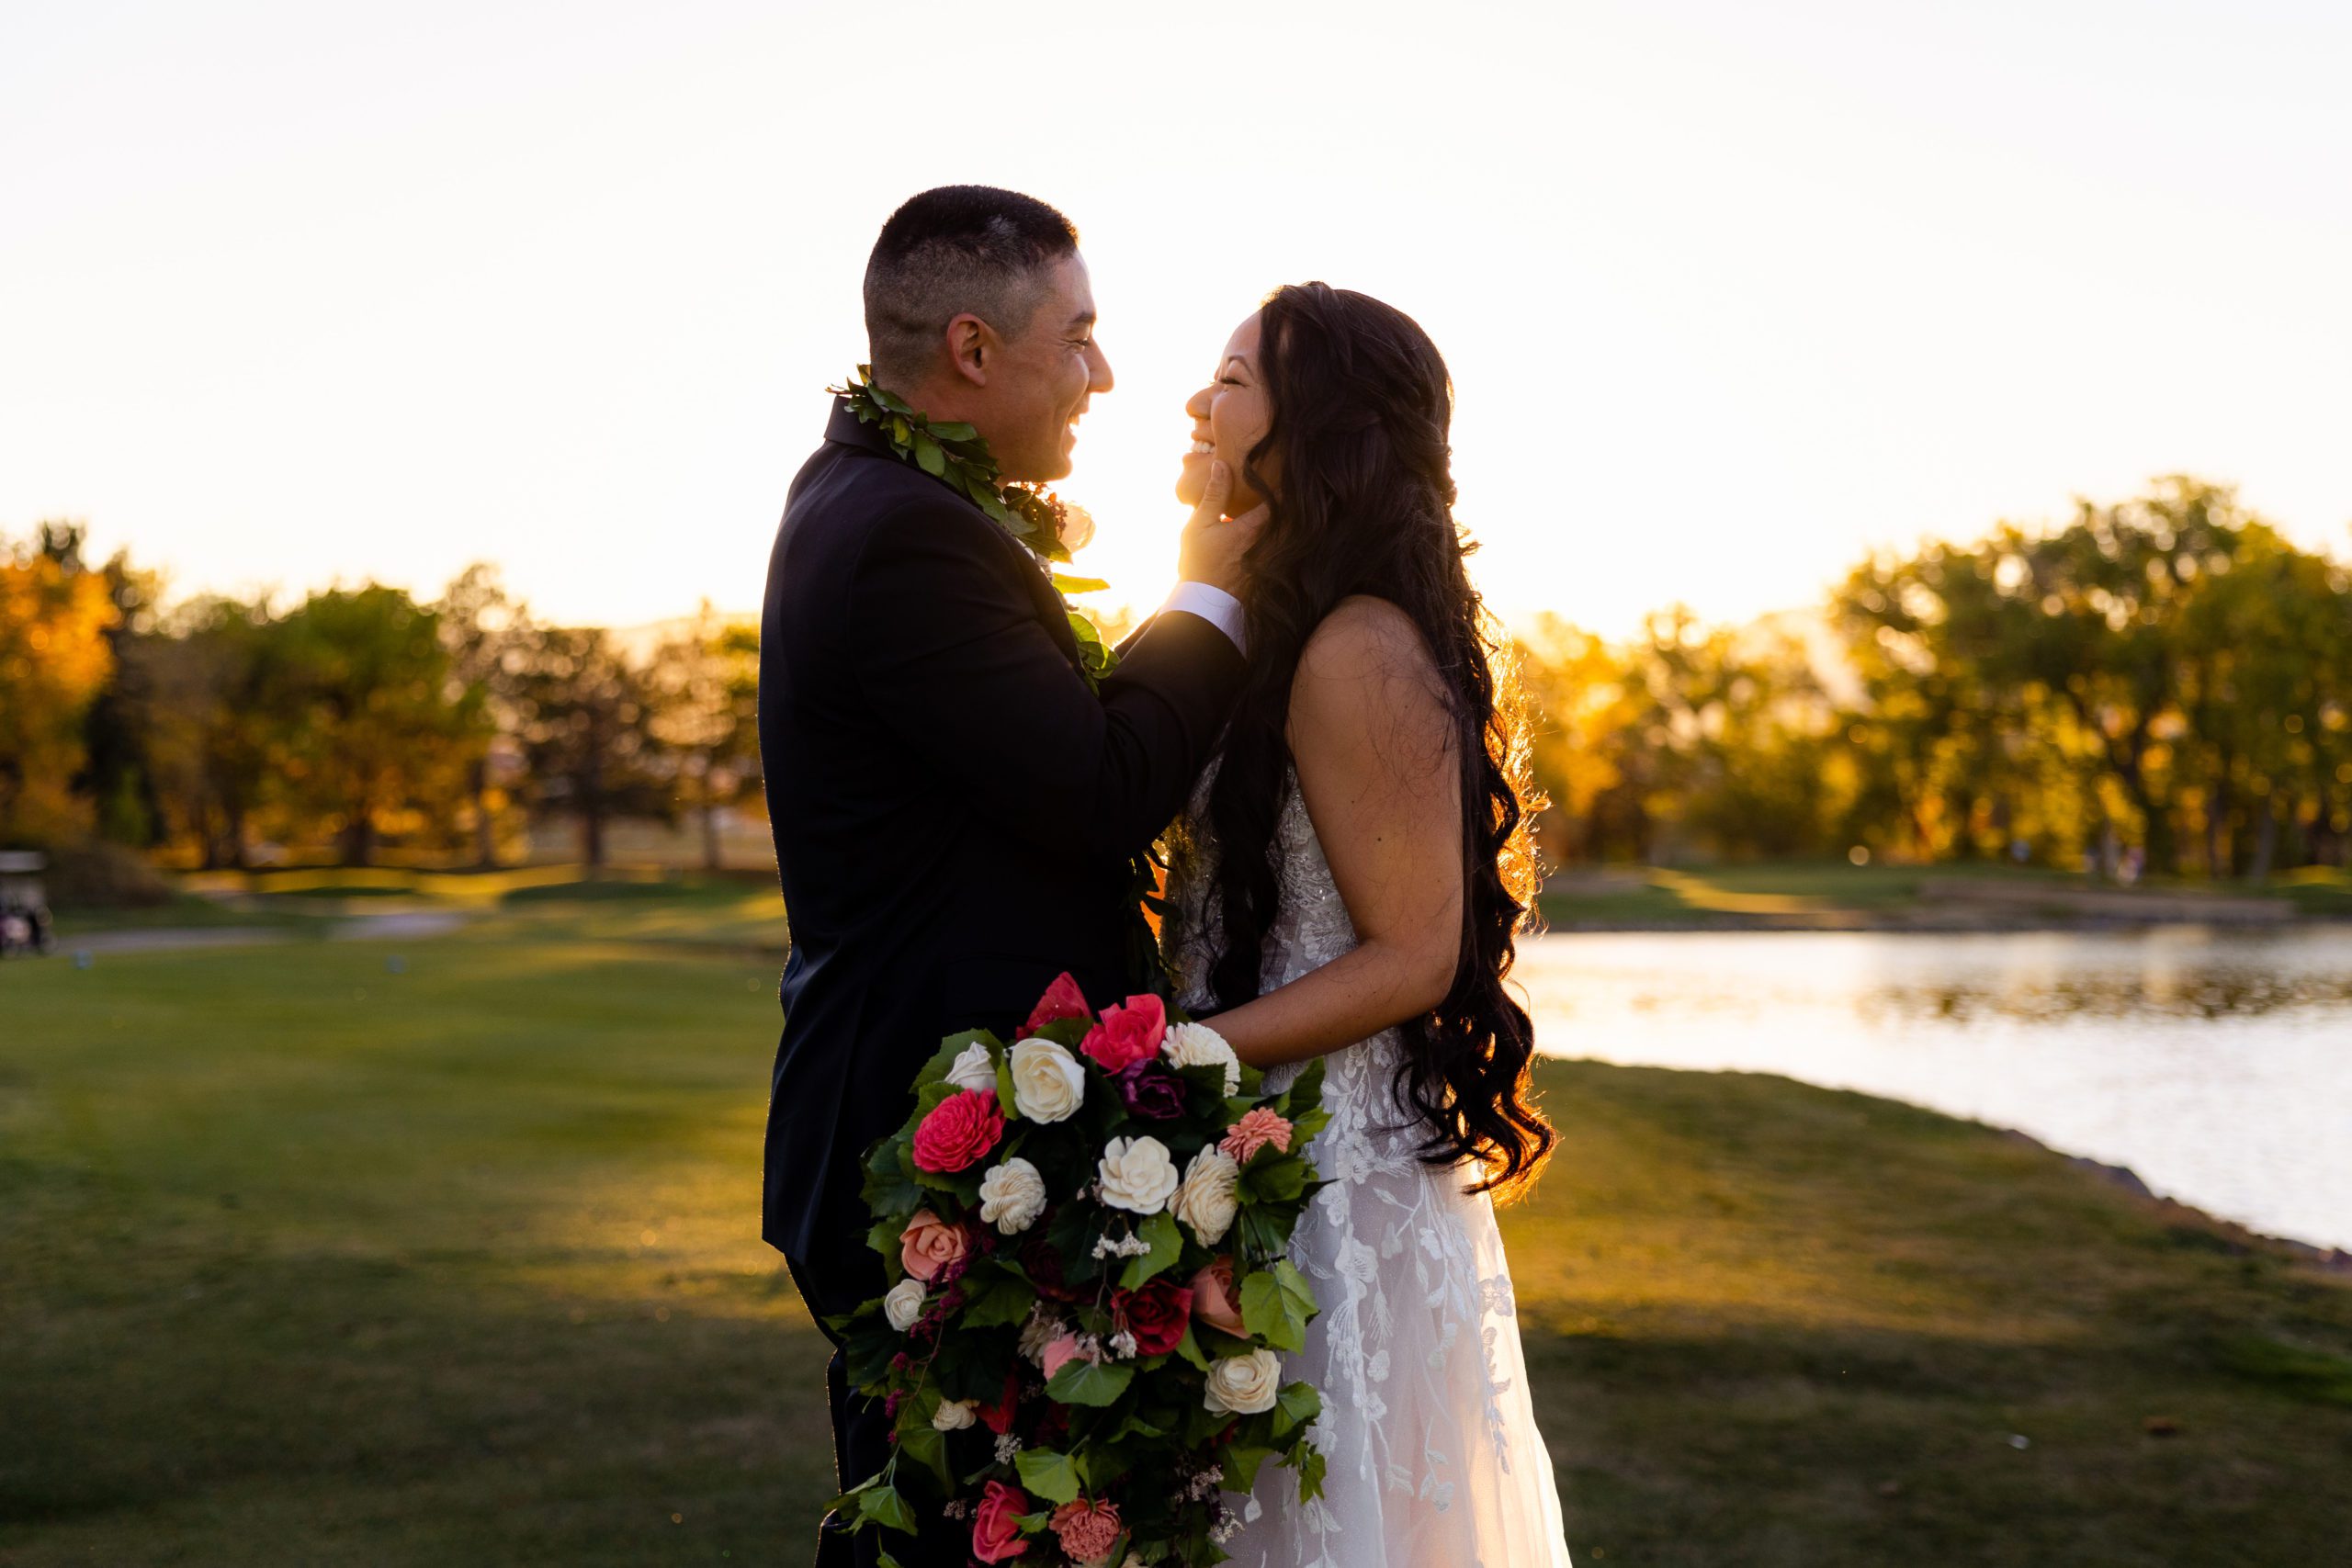 Sola wood flower bouquet, Fake wedding bouquet, sunset wedding photos, Hawaii wedding, Colorado wedding, Country club wedding, Golf Course wedding